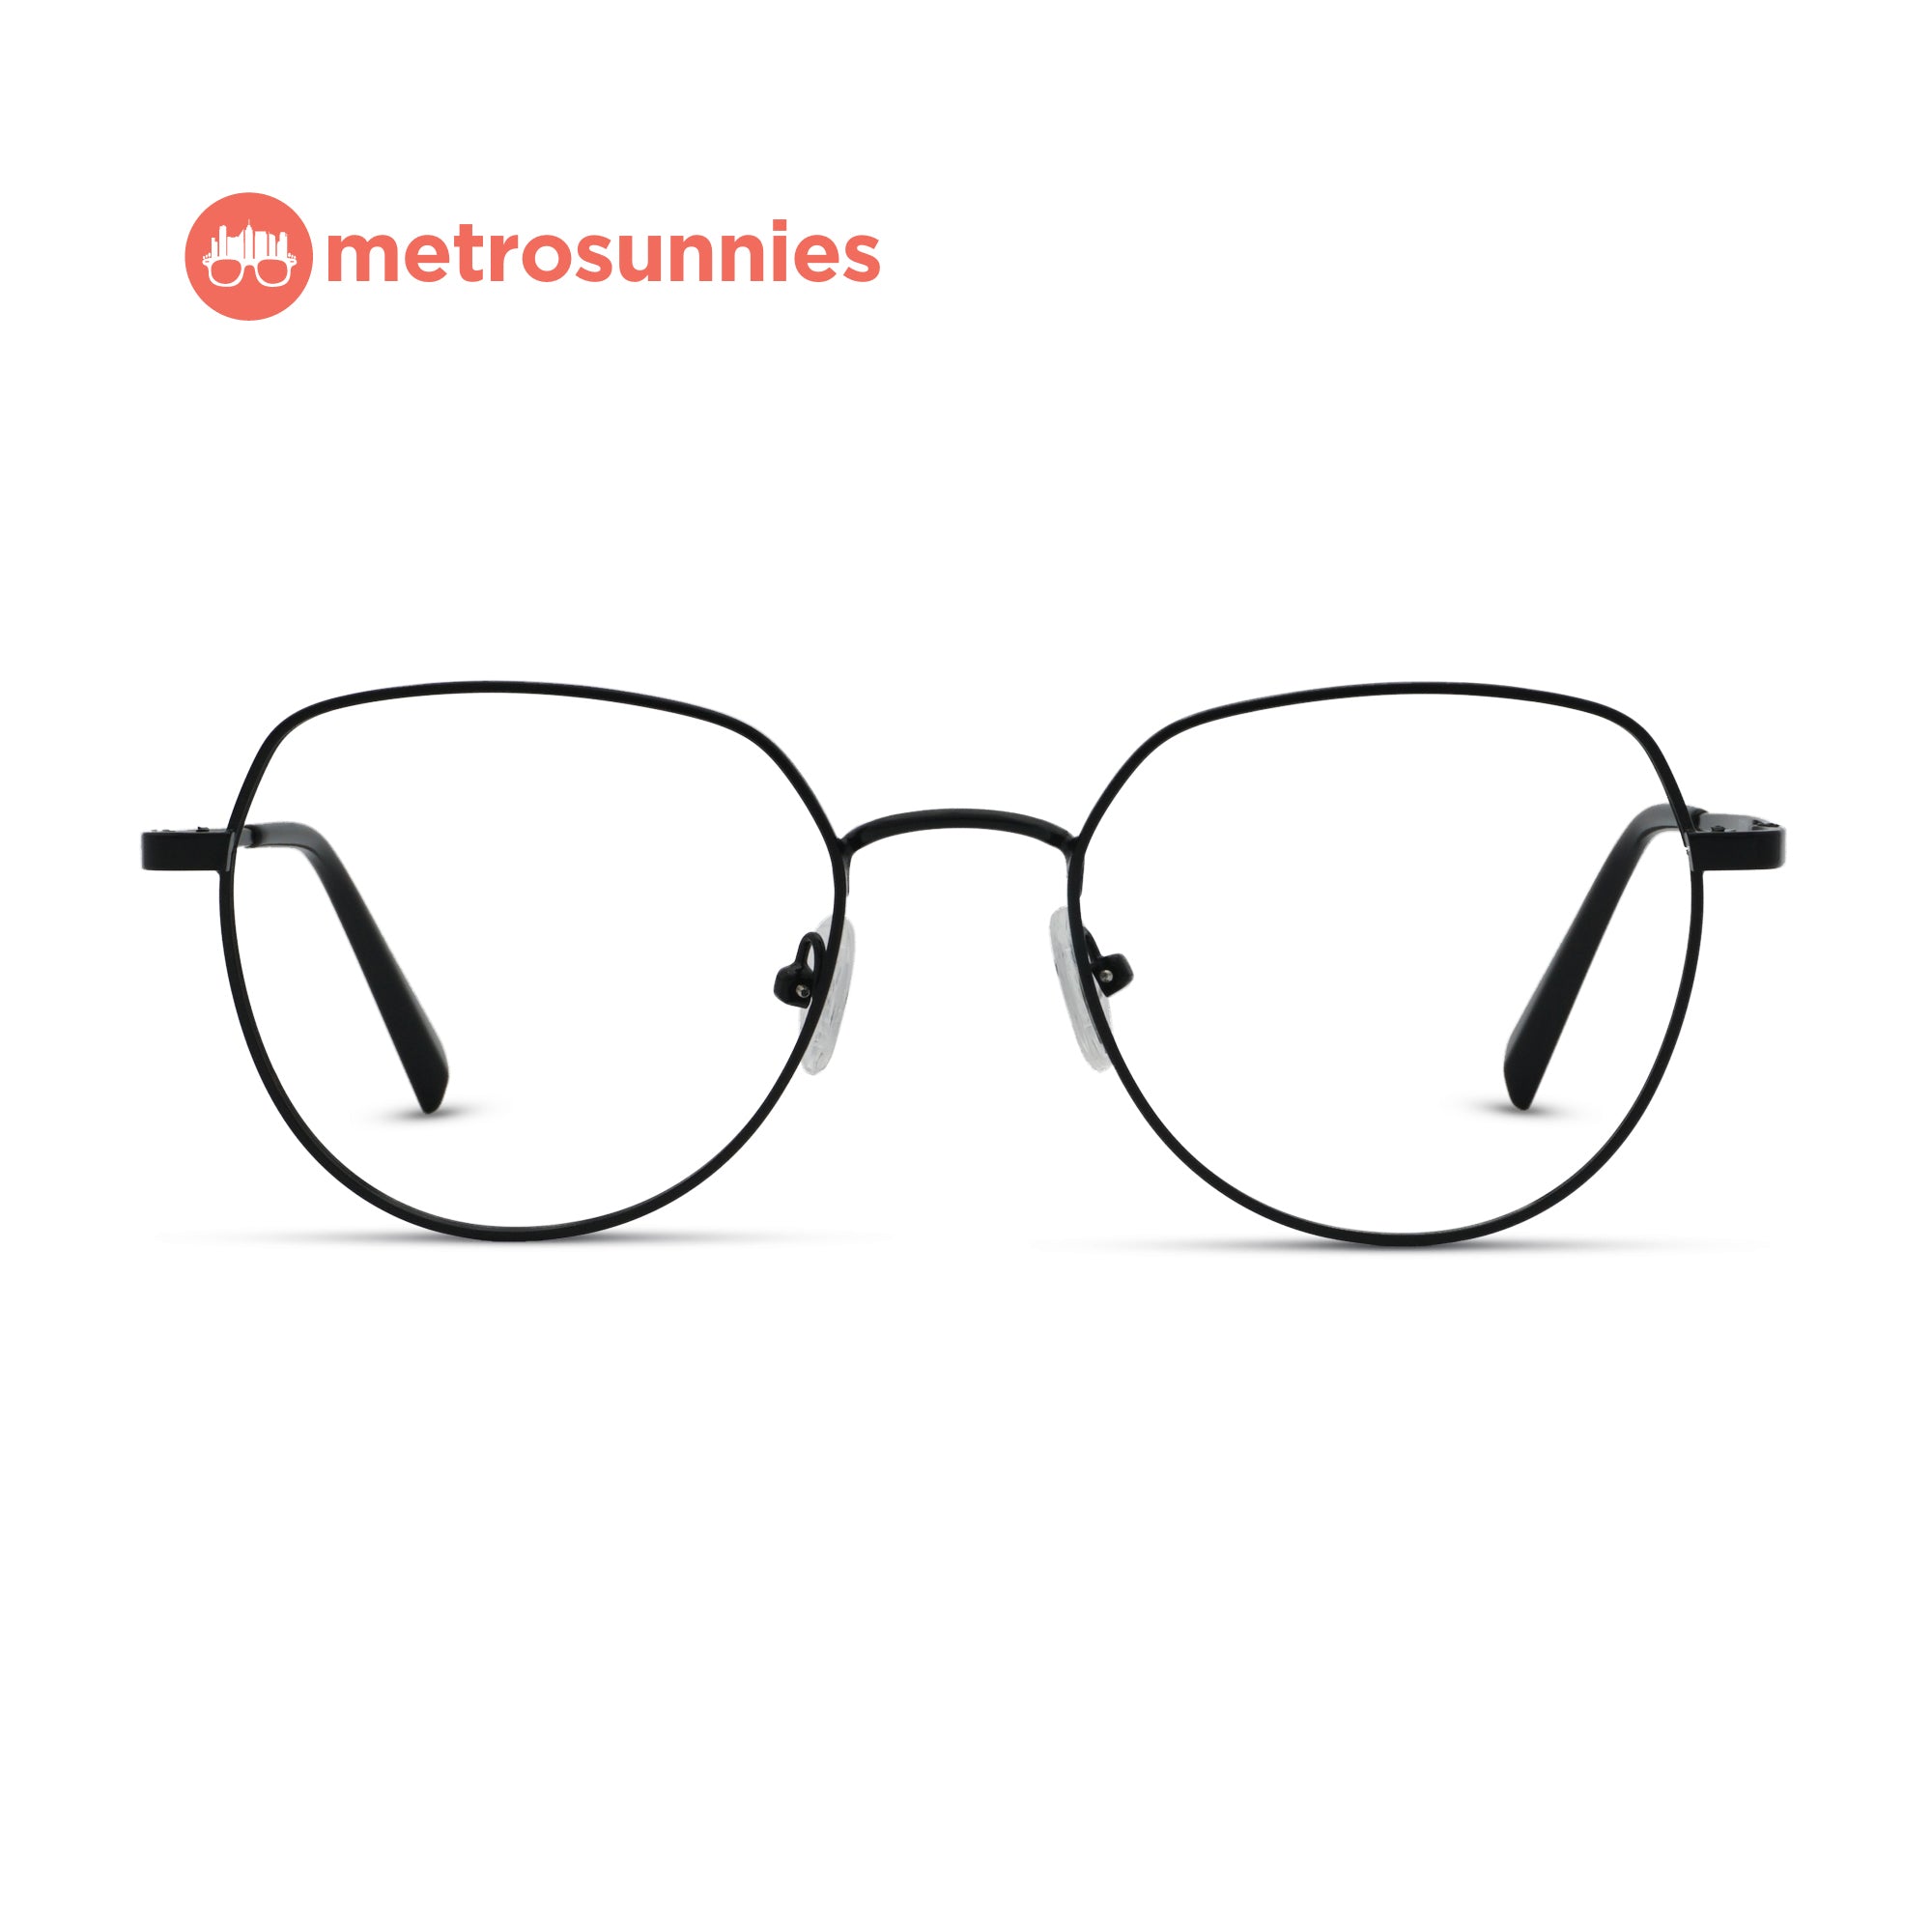 MetroSunnies Lily Specs (Black) / Replaceable Lens / Eyeglasses for Men and Women